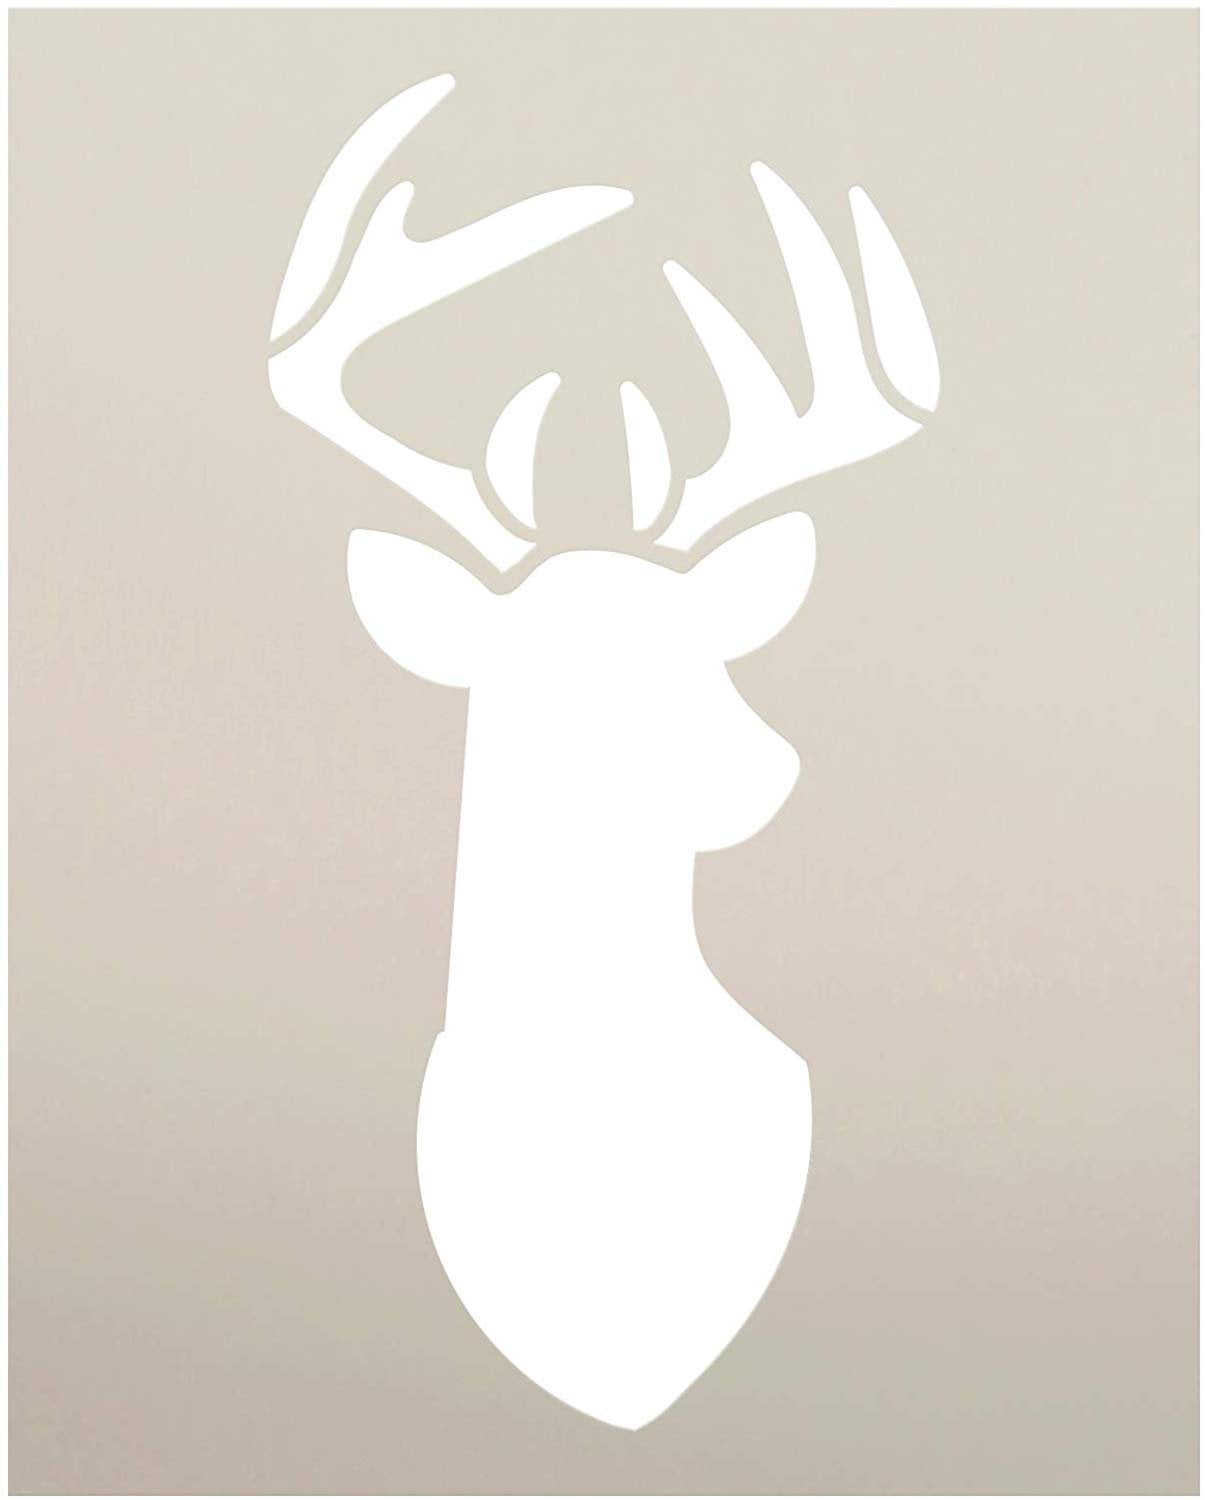 Stag deer silhouette Stencil Reusable Home Wall Decor Art Craft Paint Stencils 